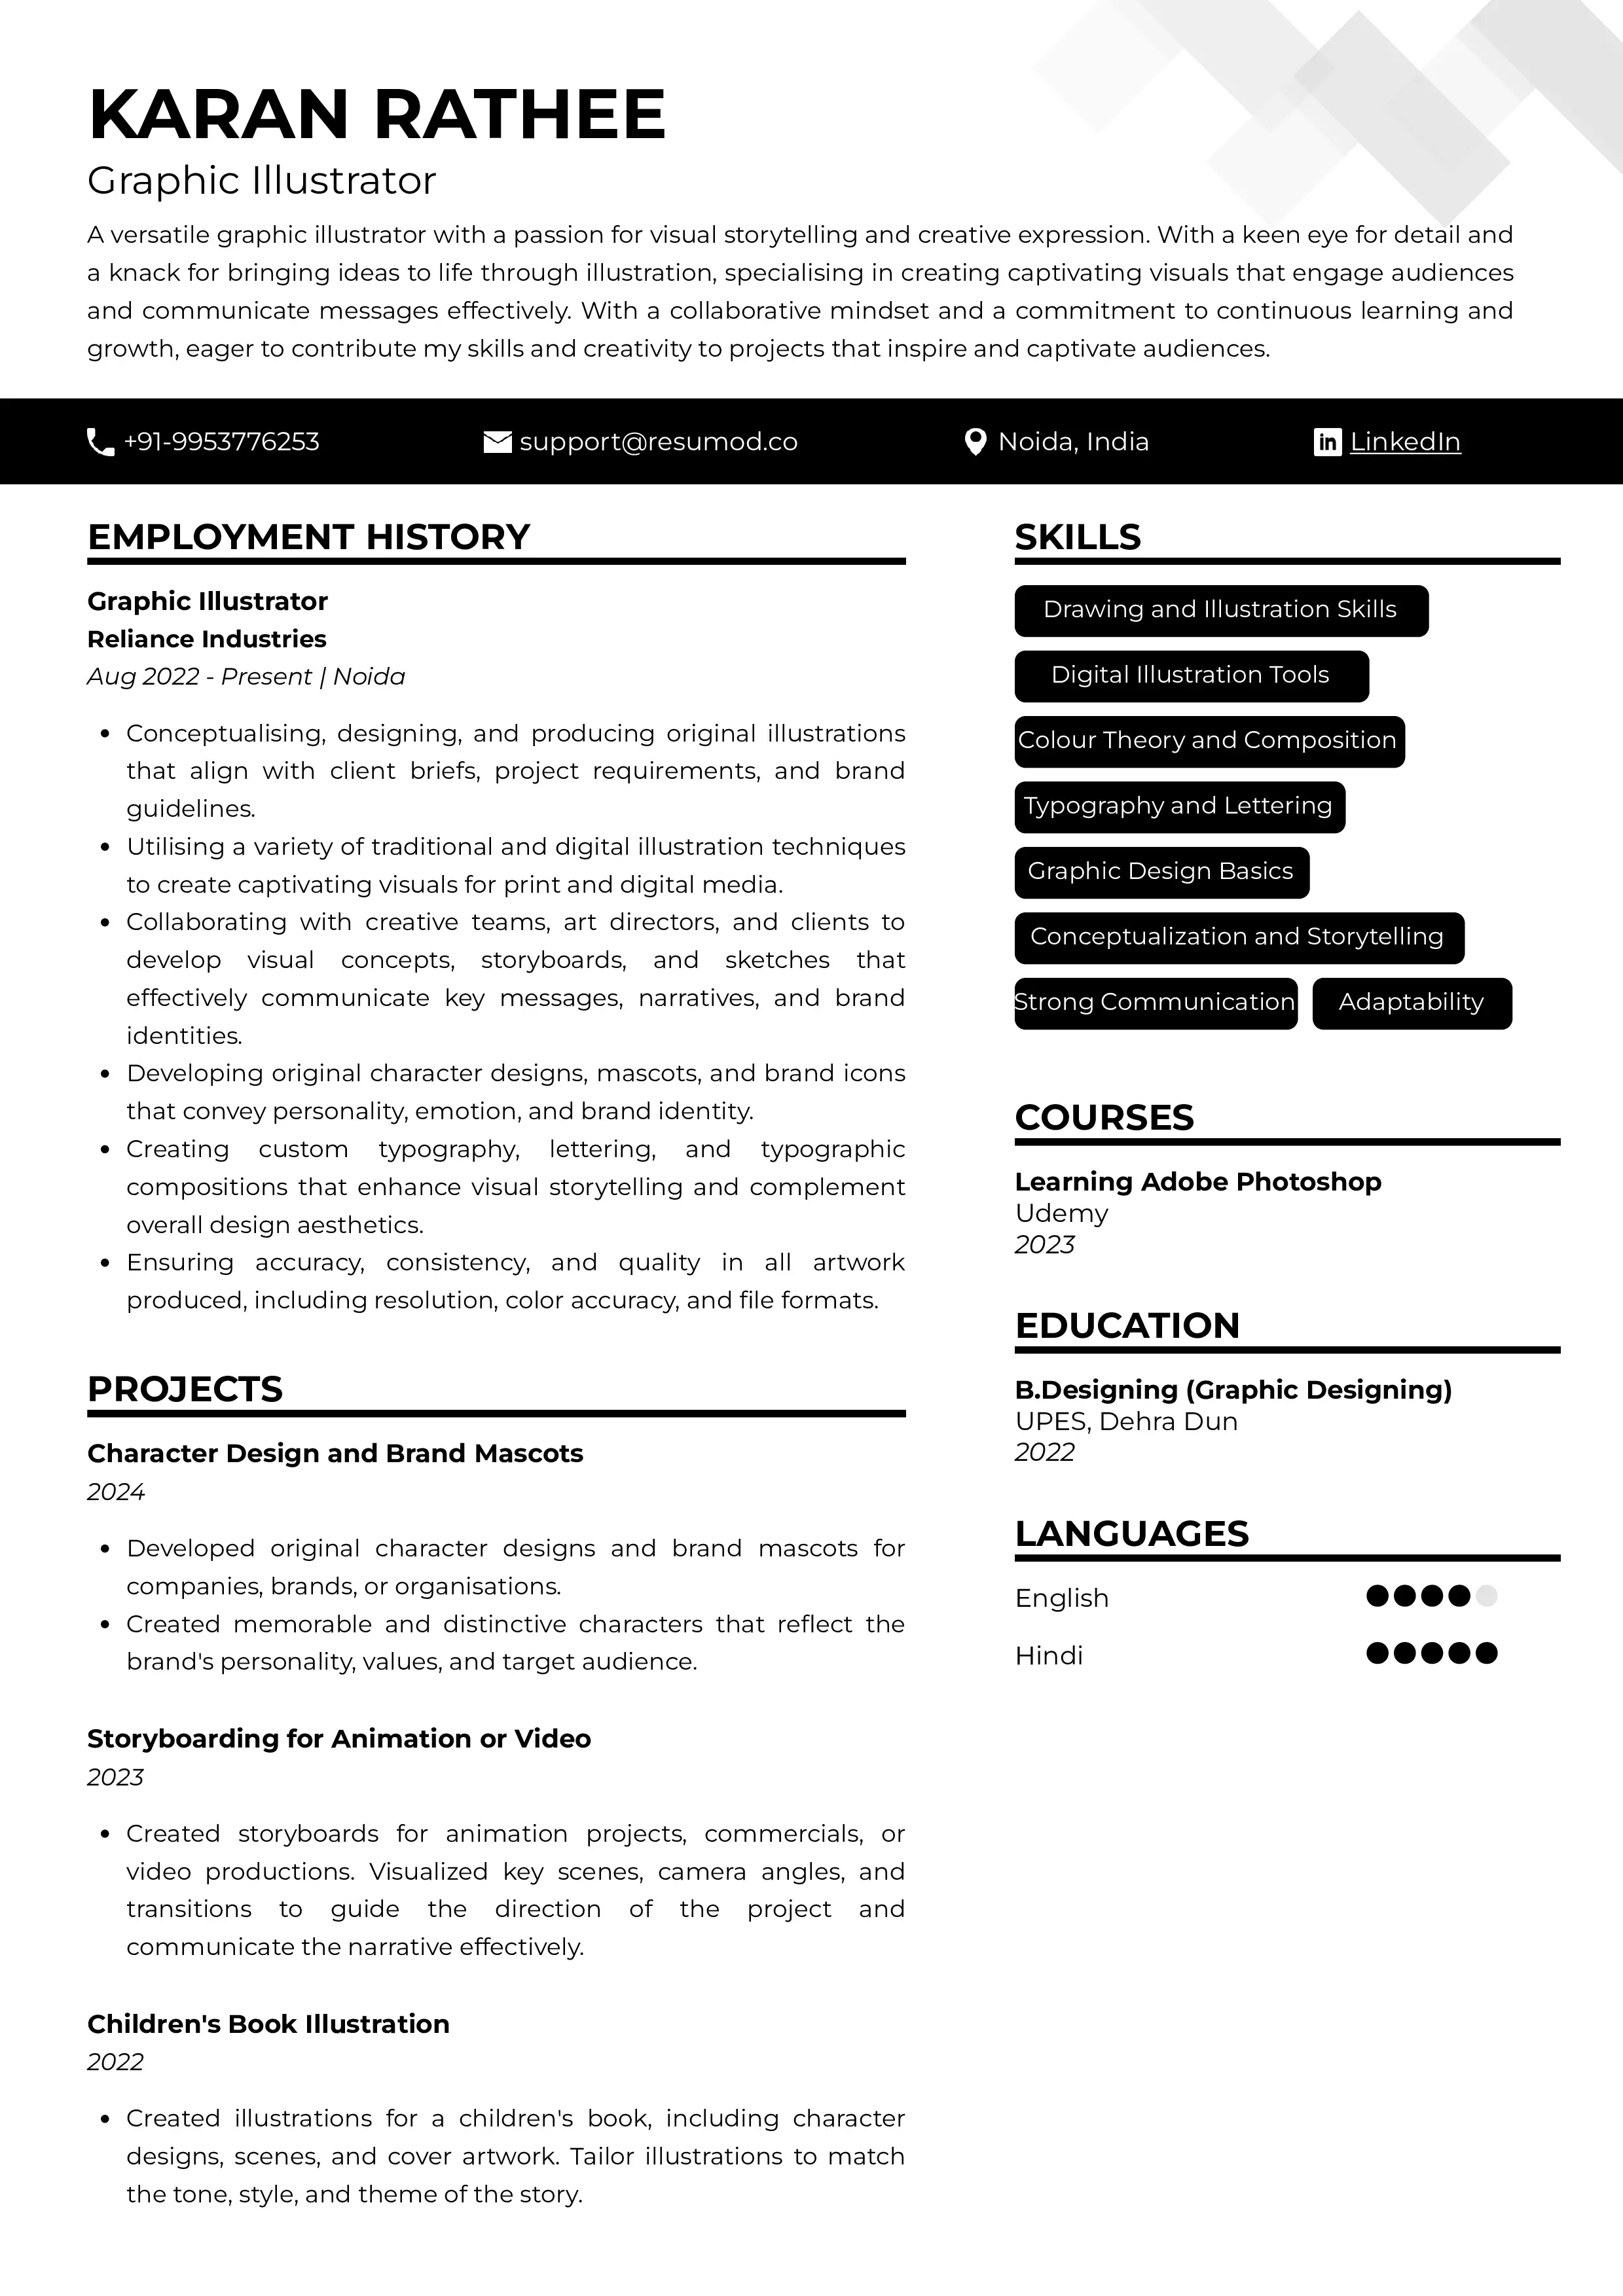 Sample Resume of Graphic Illustrator | Free Resume Templates & Samples on Resumod.co